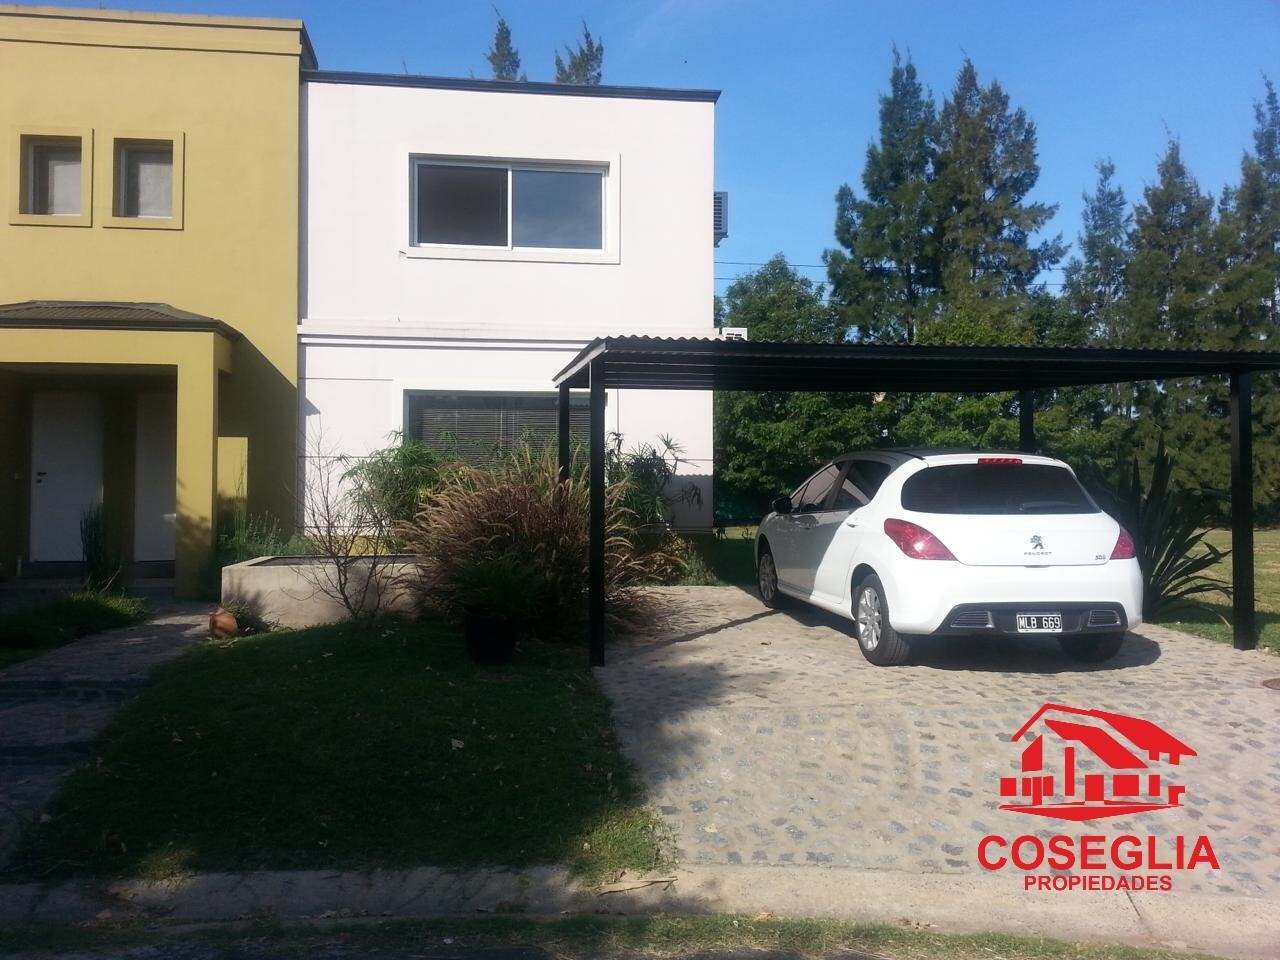 #5075349 | Sale | House | Pilar Plaza (Coseglia Propiedades)